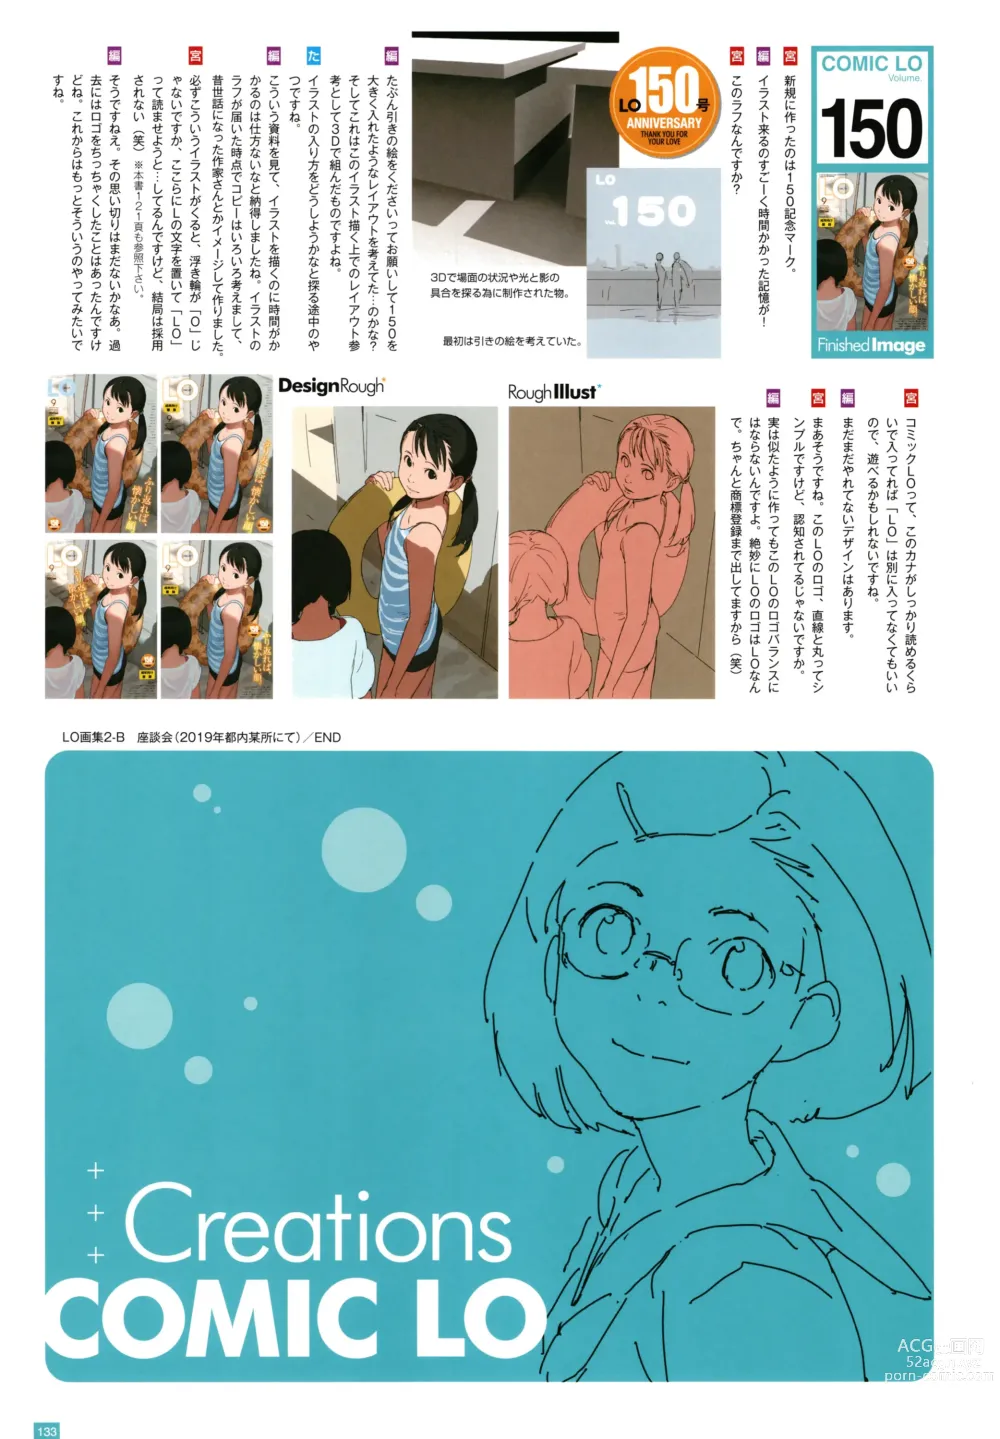 Page 136 of manga LO Artbook 2-B TAKAMICHI LO-fi WORKS